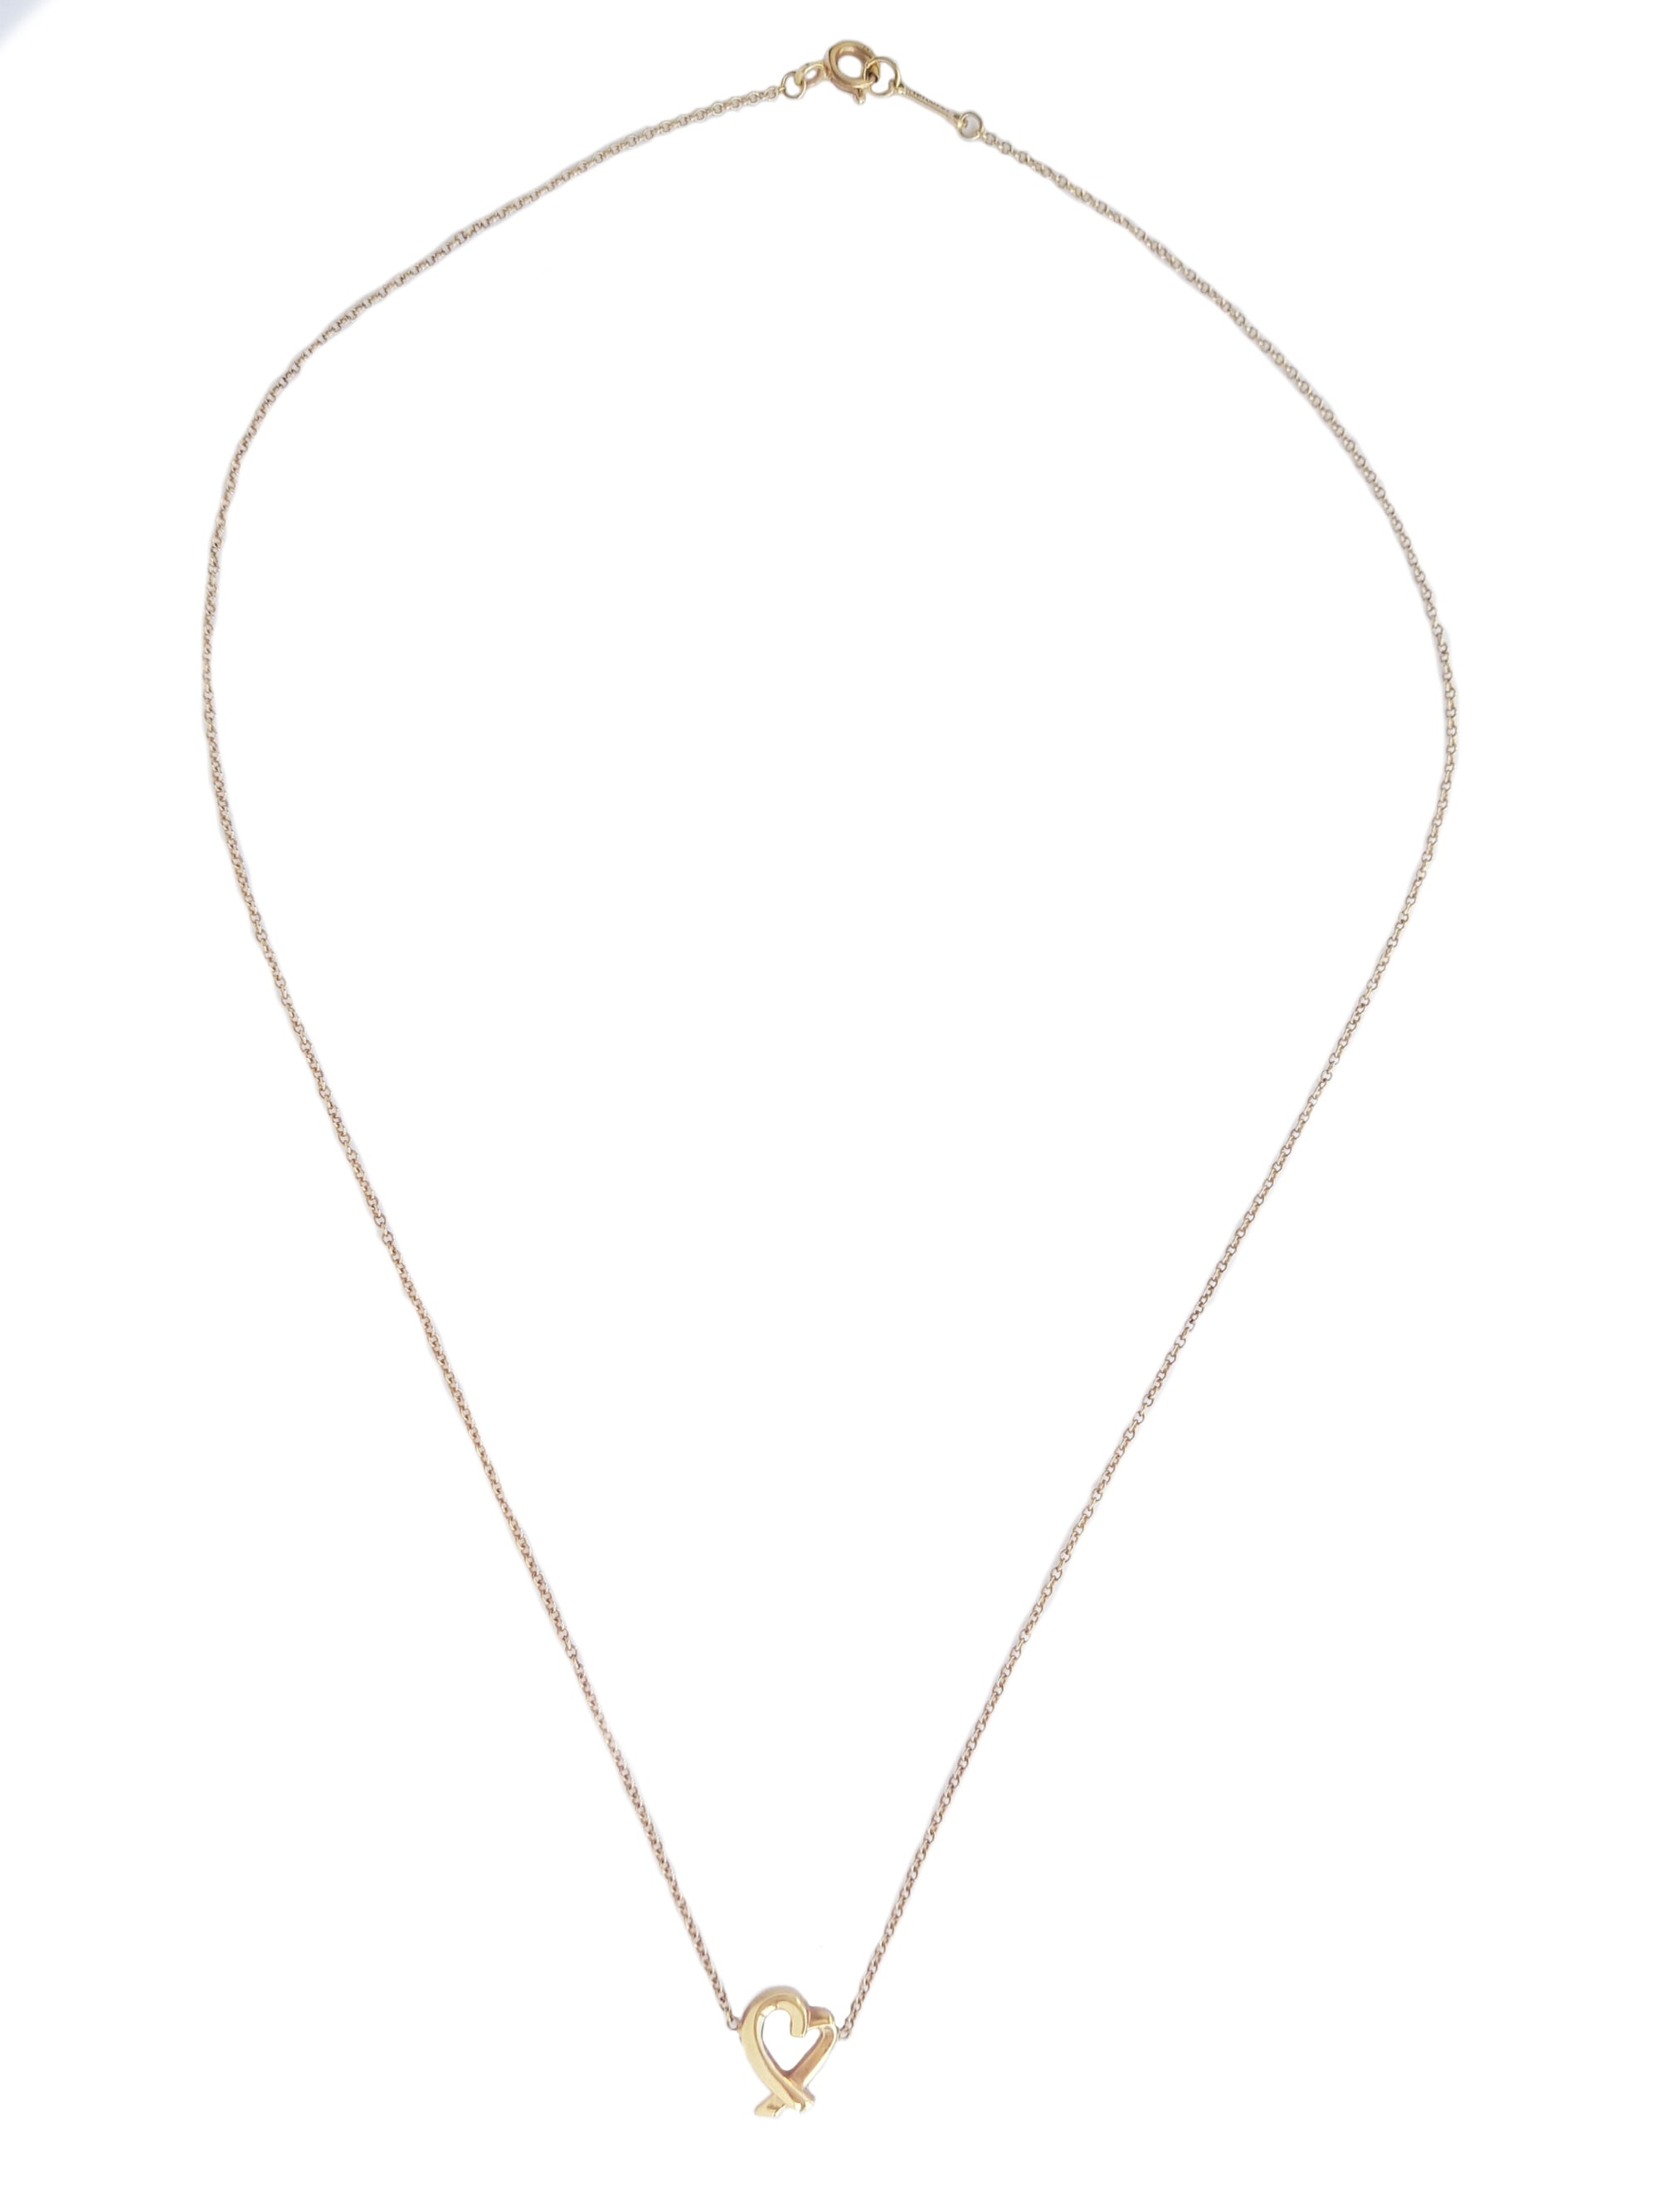 Tiffany & Co Paloma Picasso 750 Loving Heart Necklace 11mm